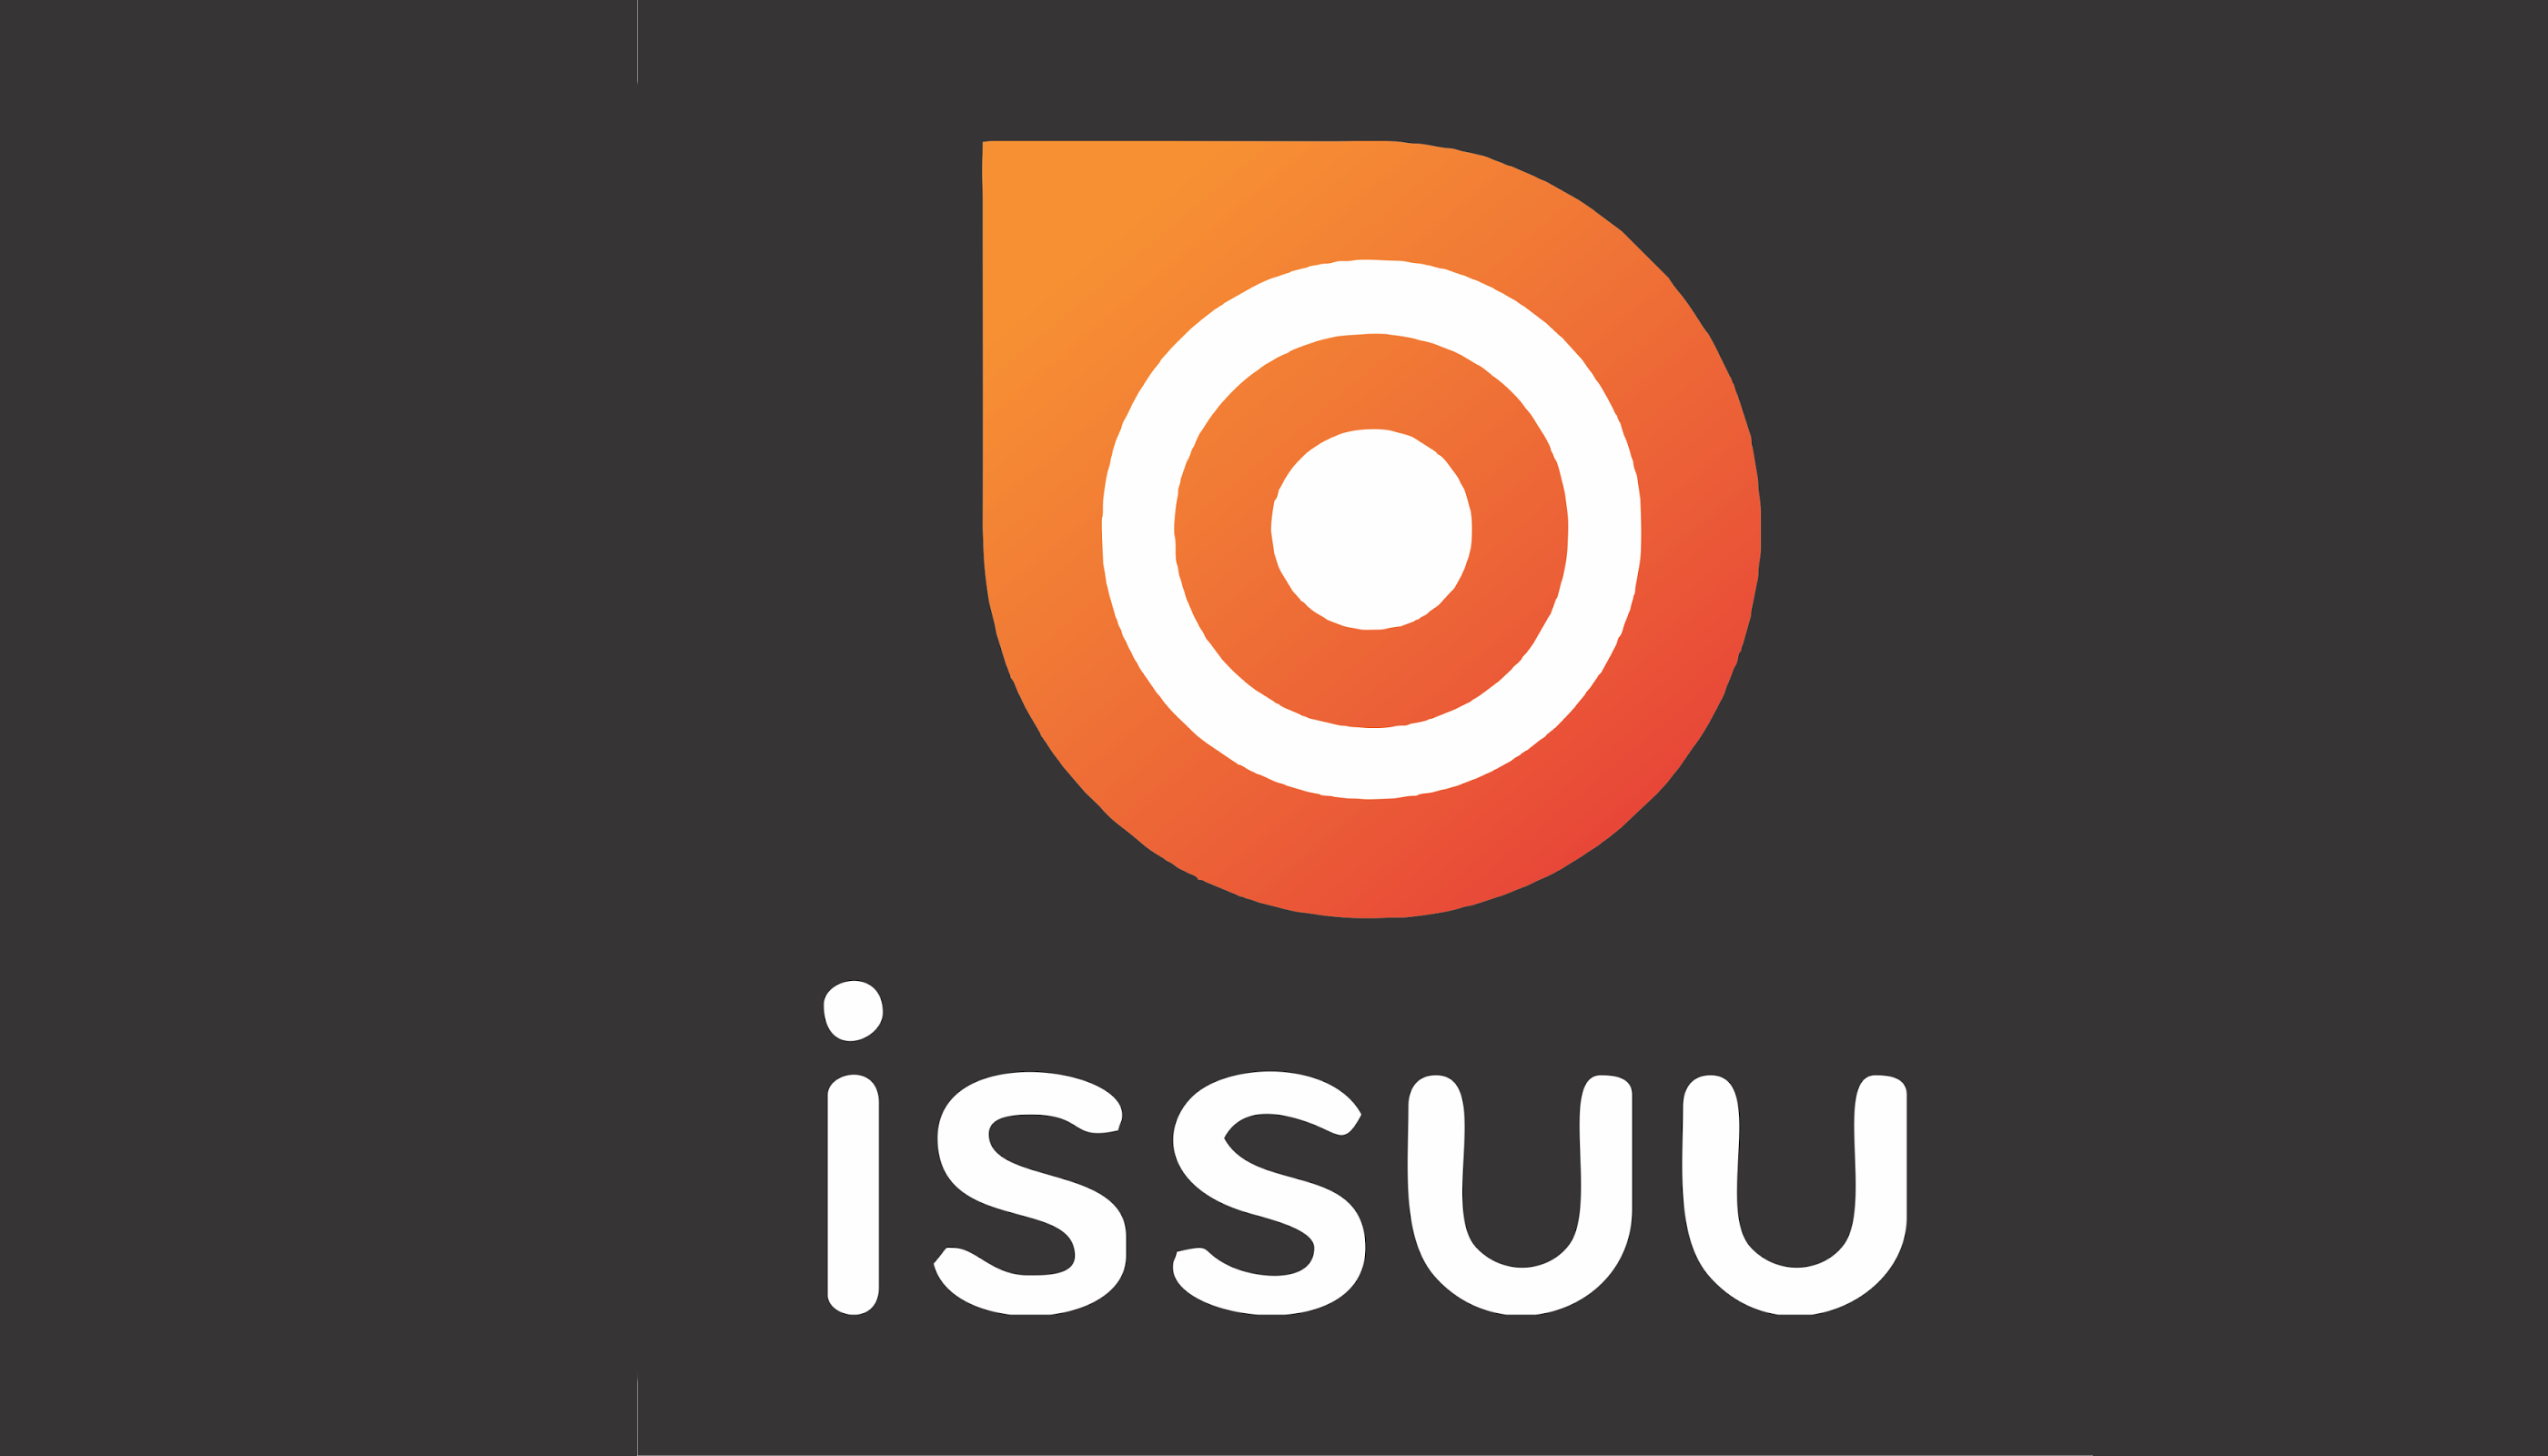 Issuu t'ajuda a compartir els teus documents a Internet Font: Issuu